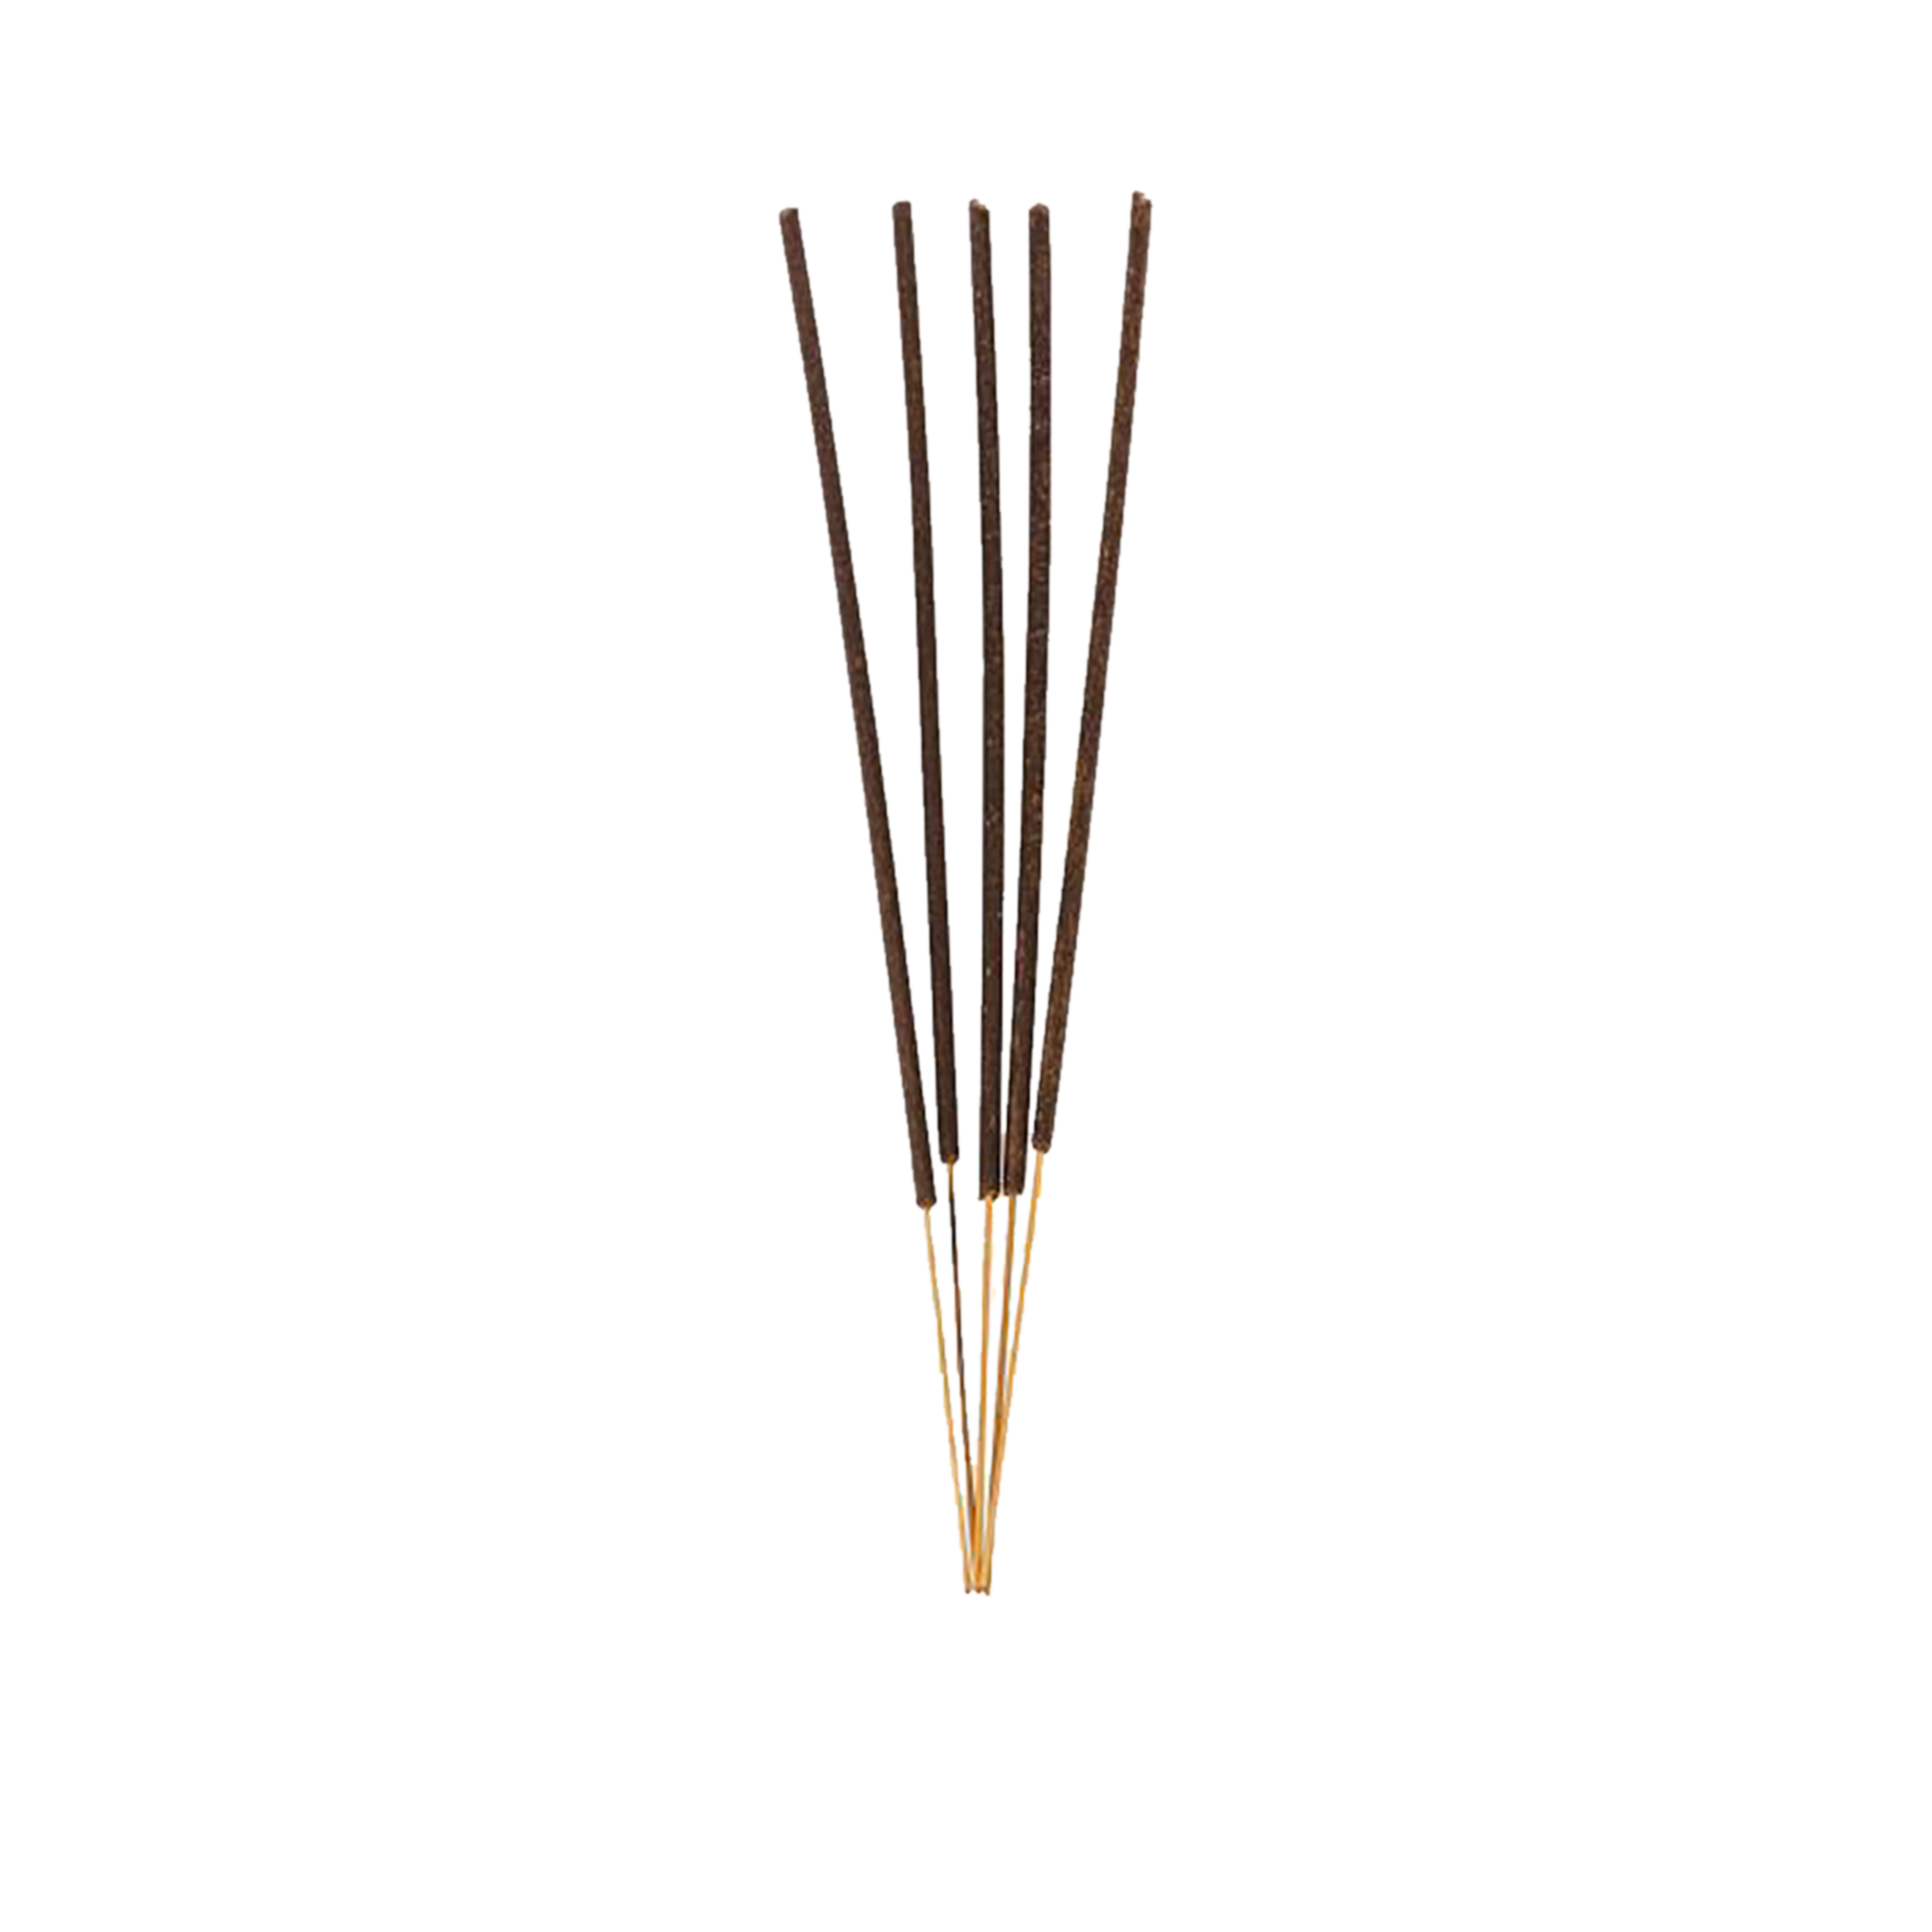 Bulgarian Rose & Oud Incense Stick Set of 20